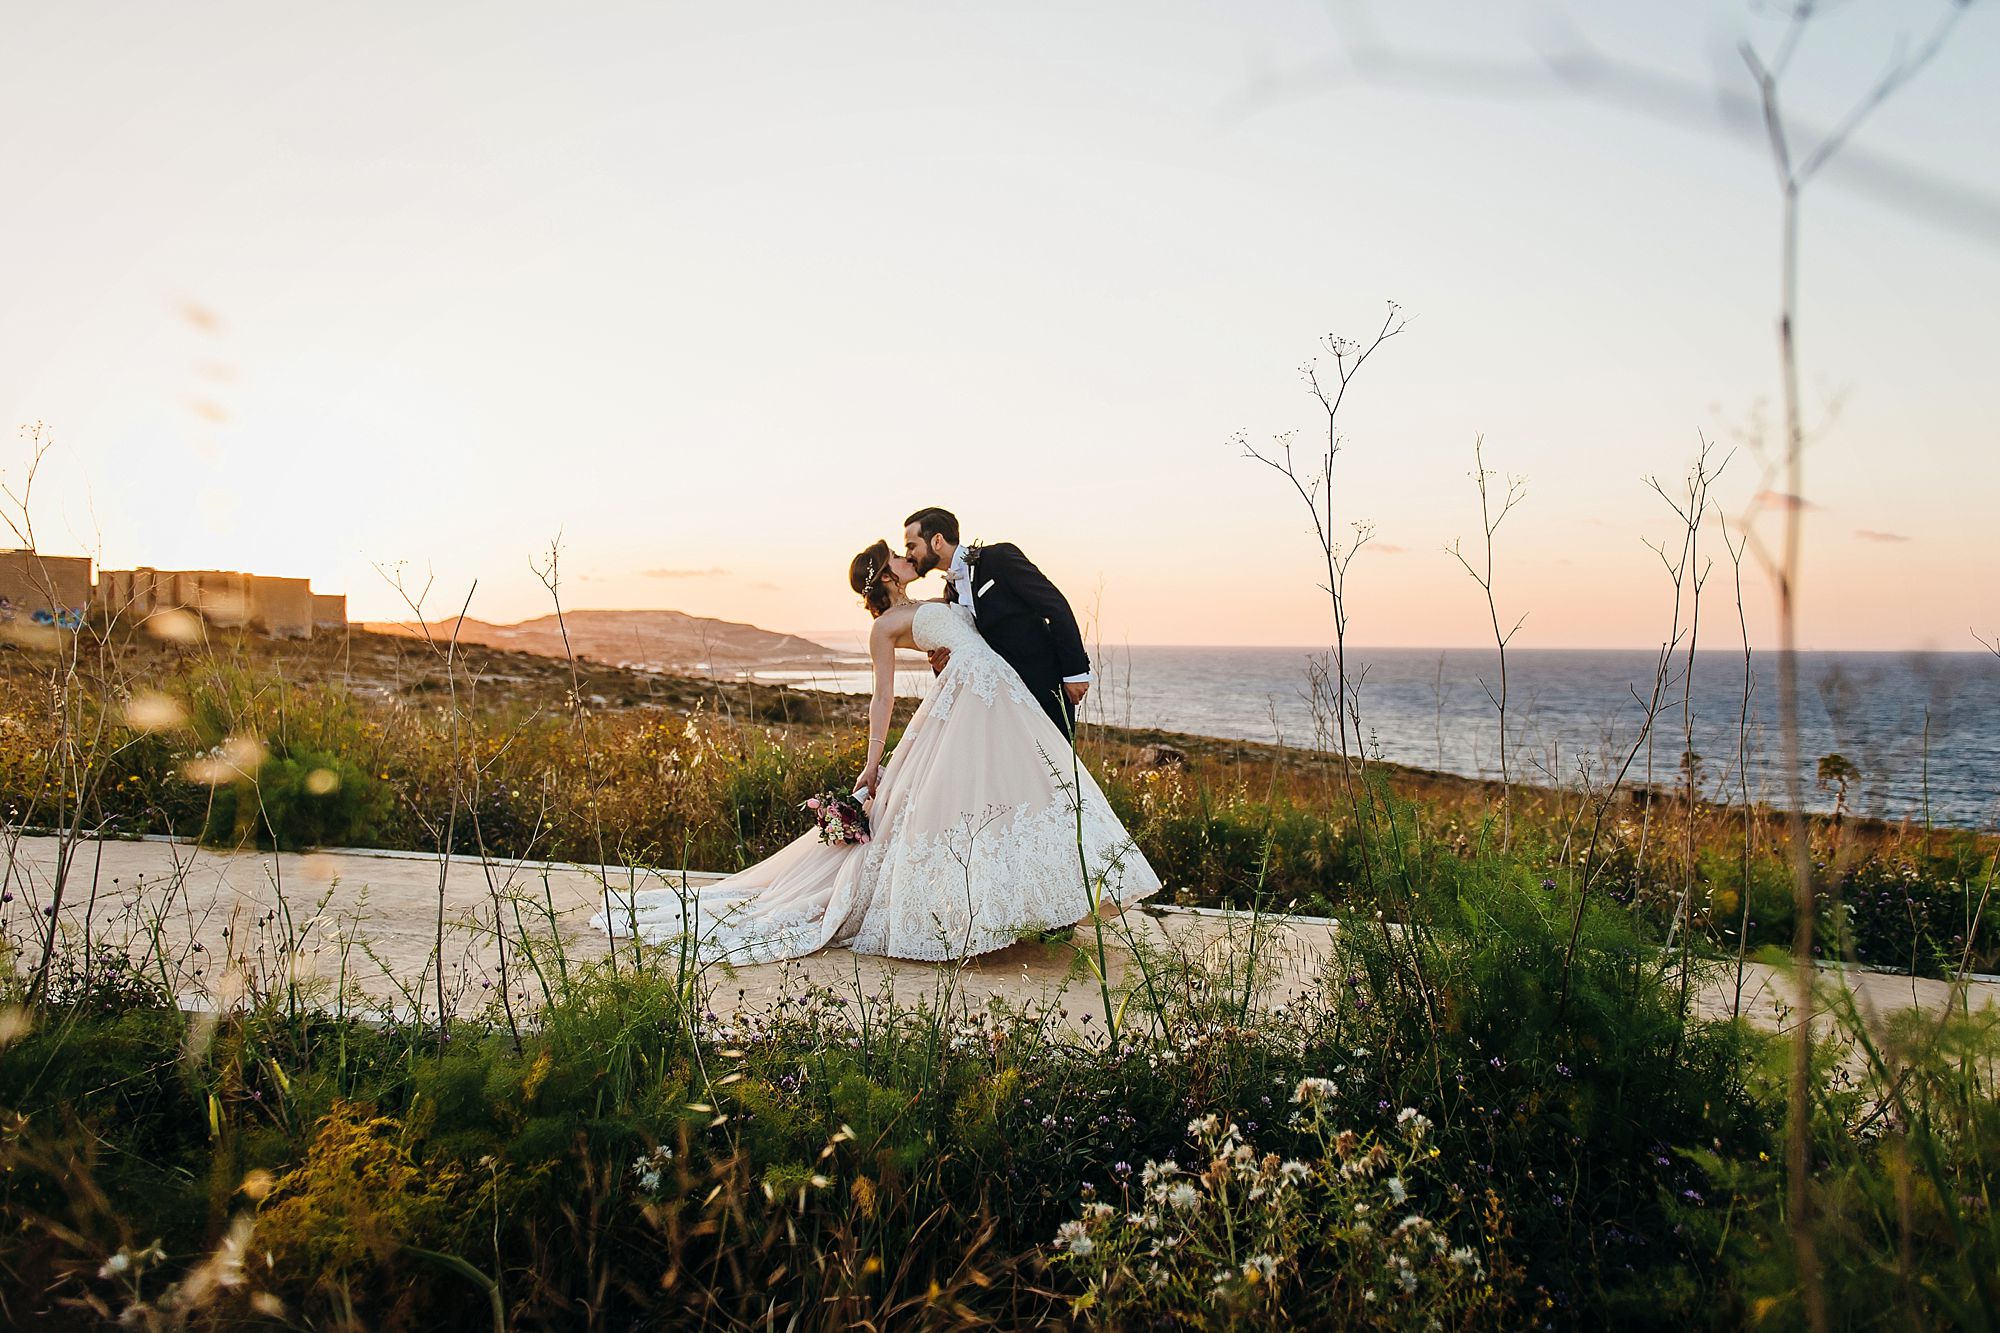 Lorraine & Cliff - The Hilton - Wedding Photography Malta - Shane P. Watts